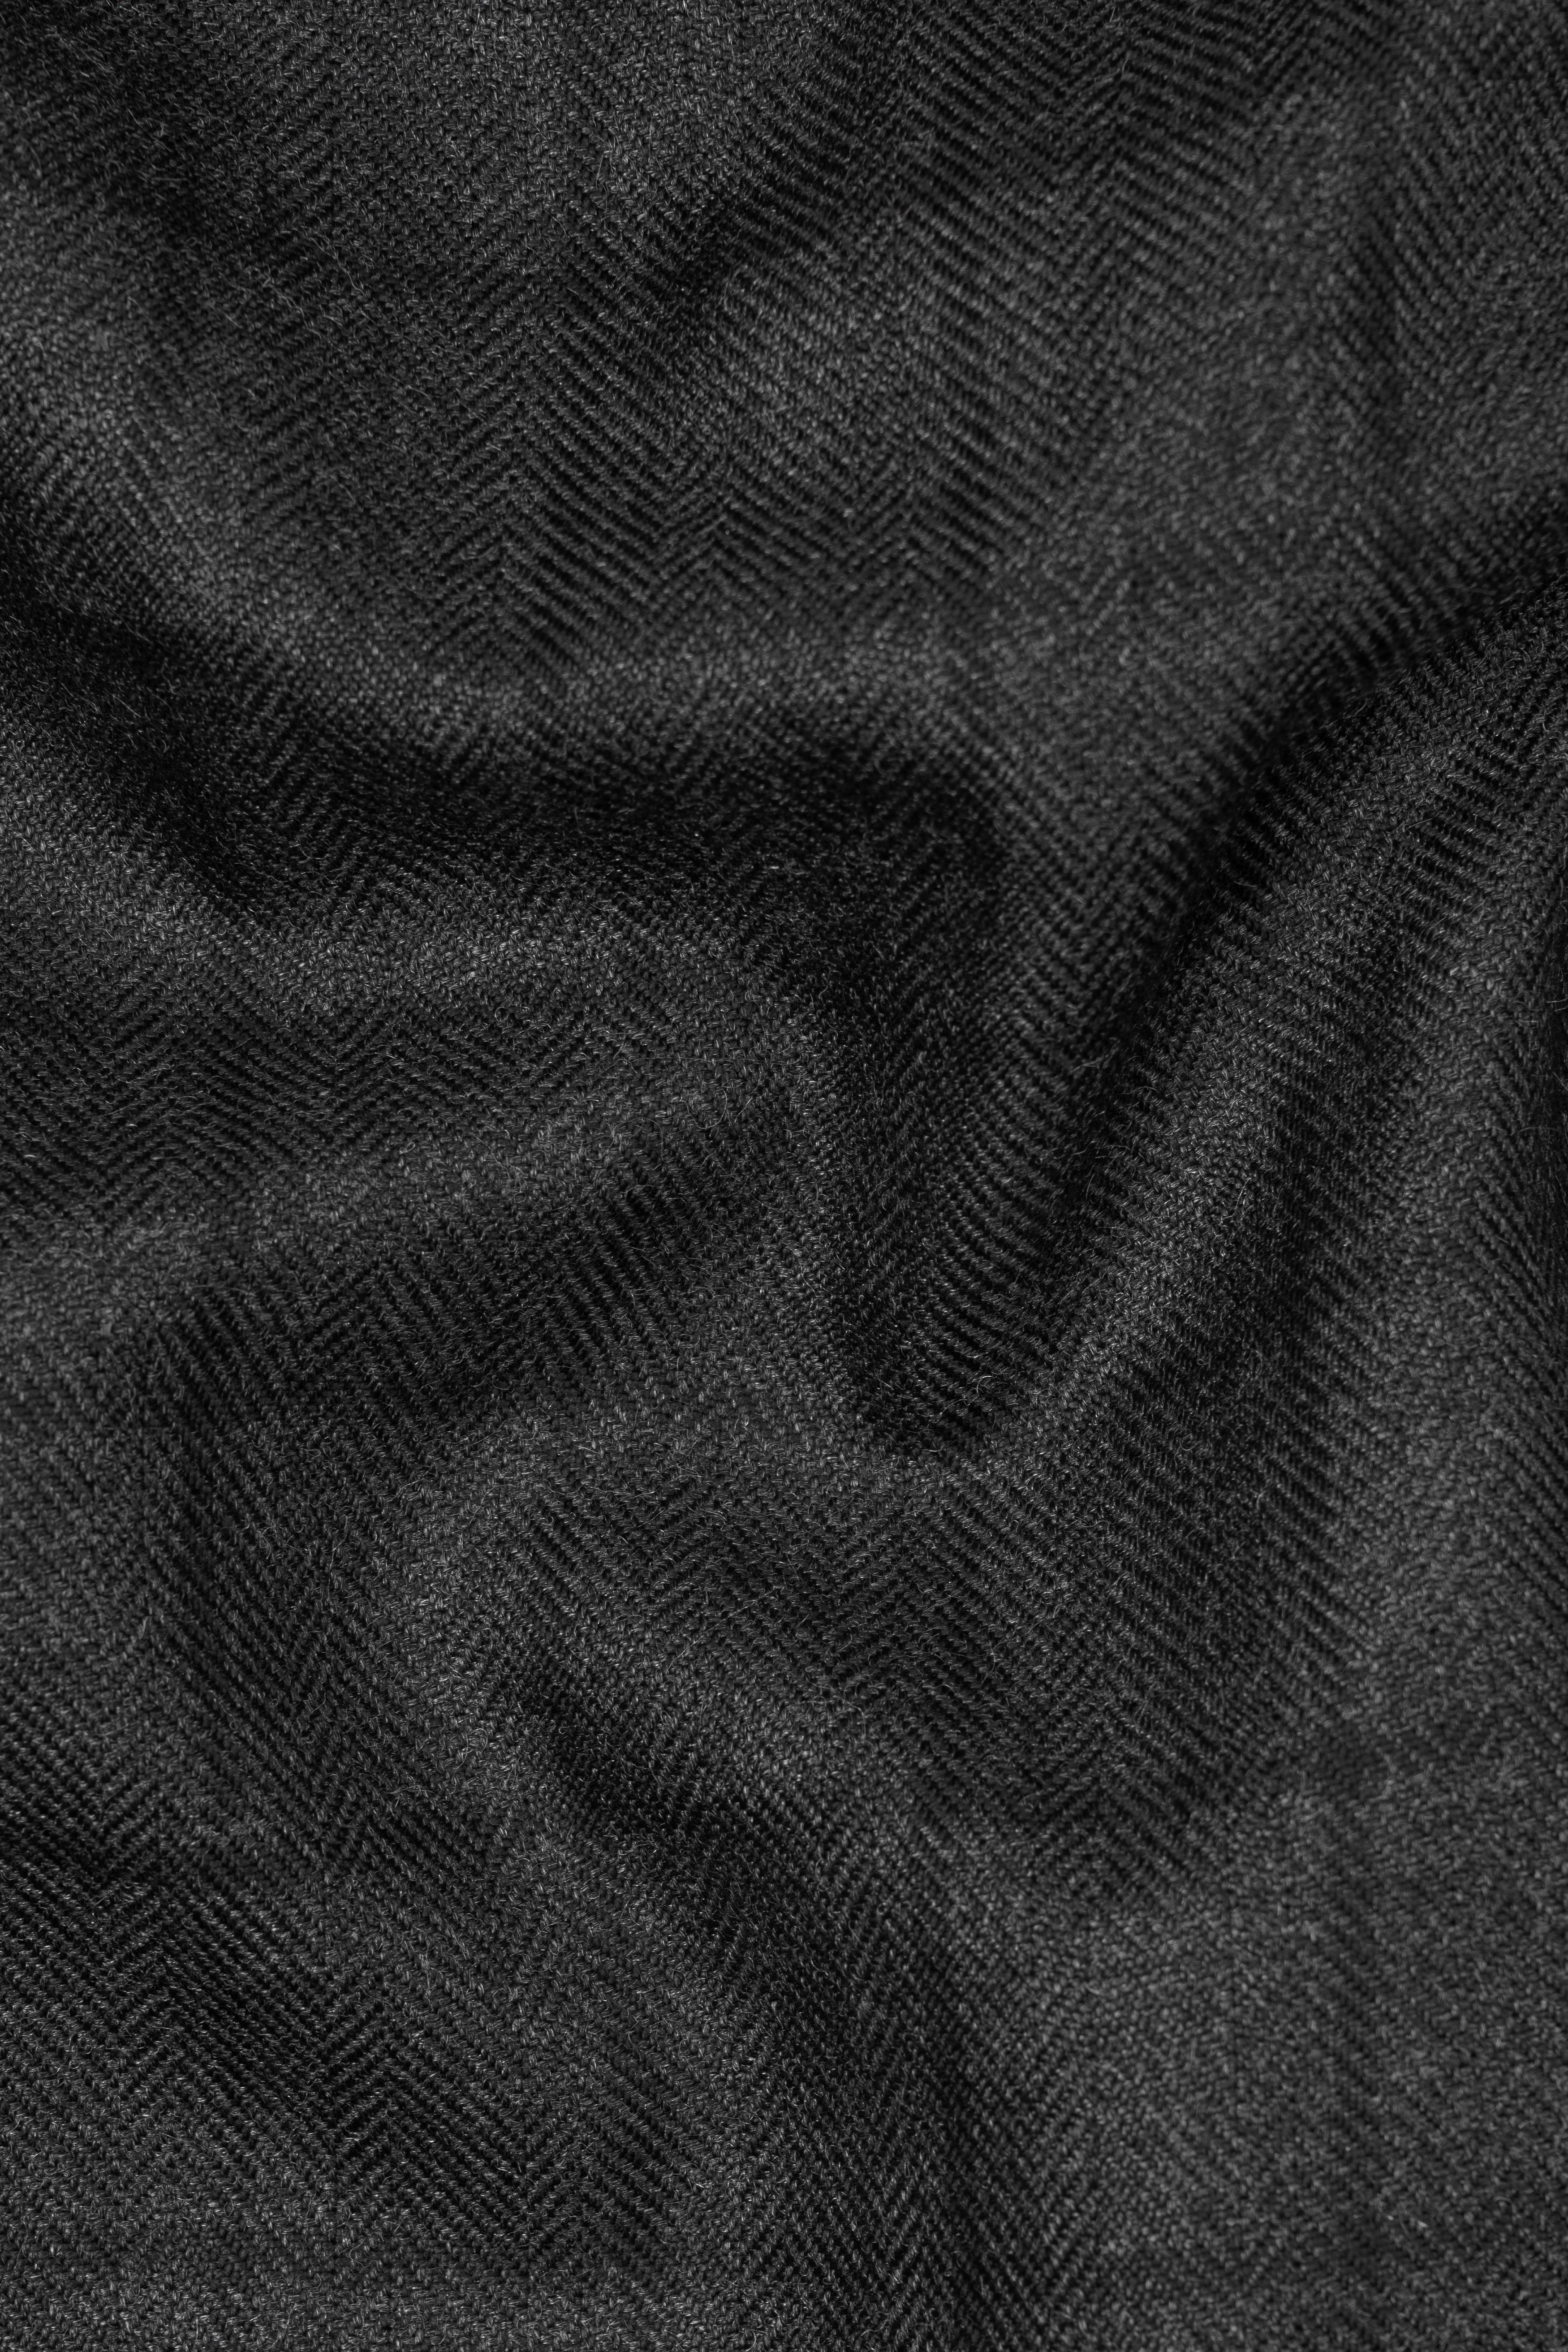 Zeus Dark Brown Plaid Tweed Waistcoat